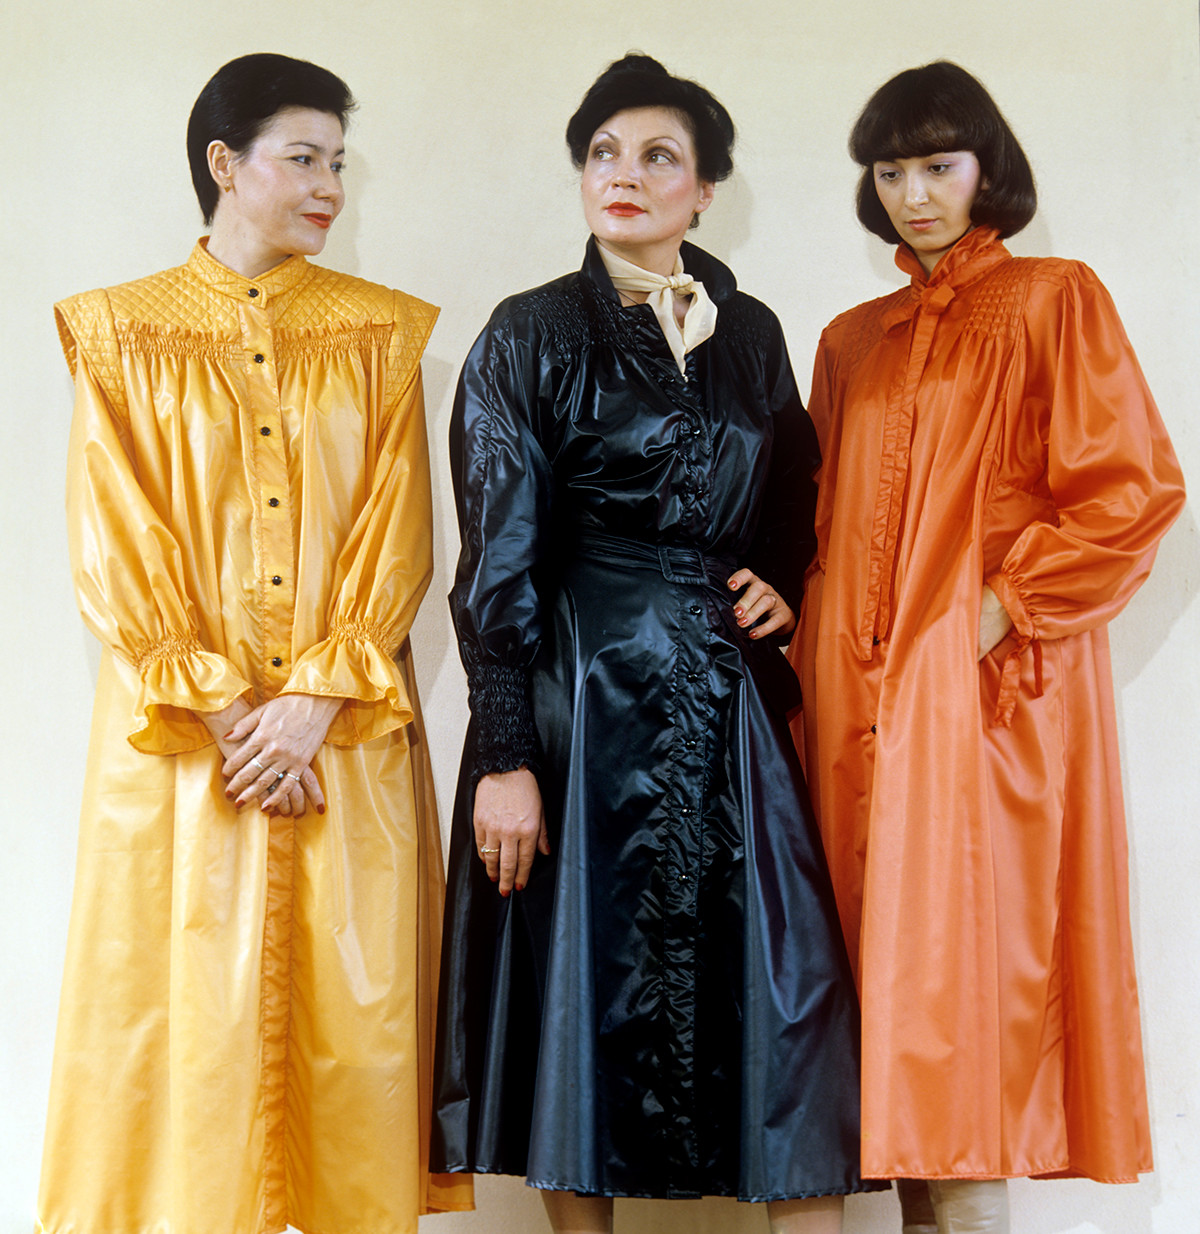 Soviet fashion models in 1982.